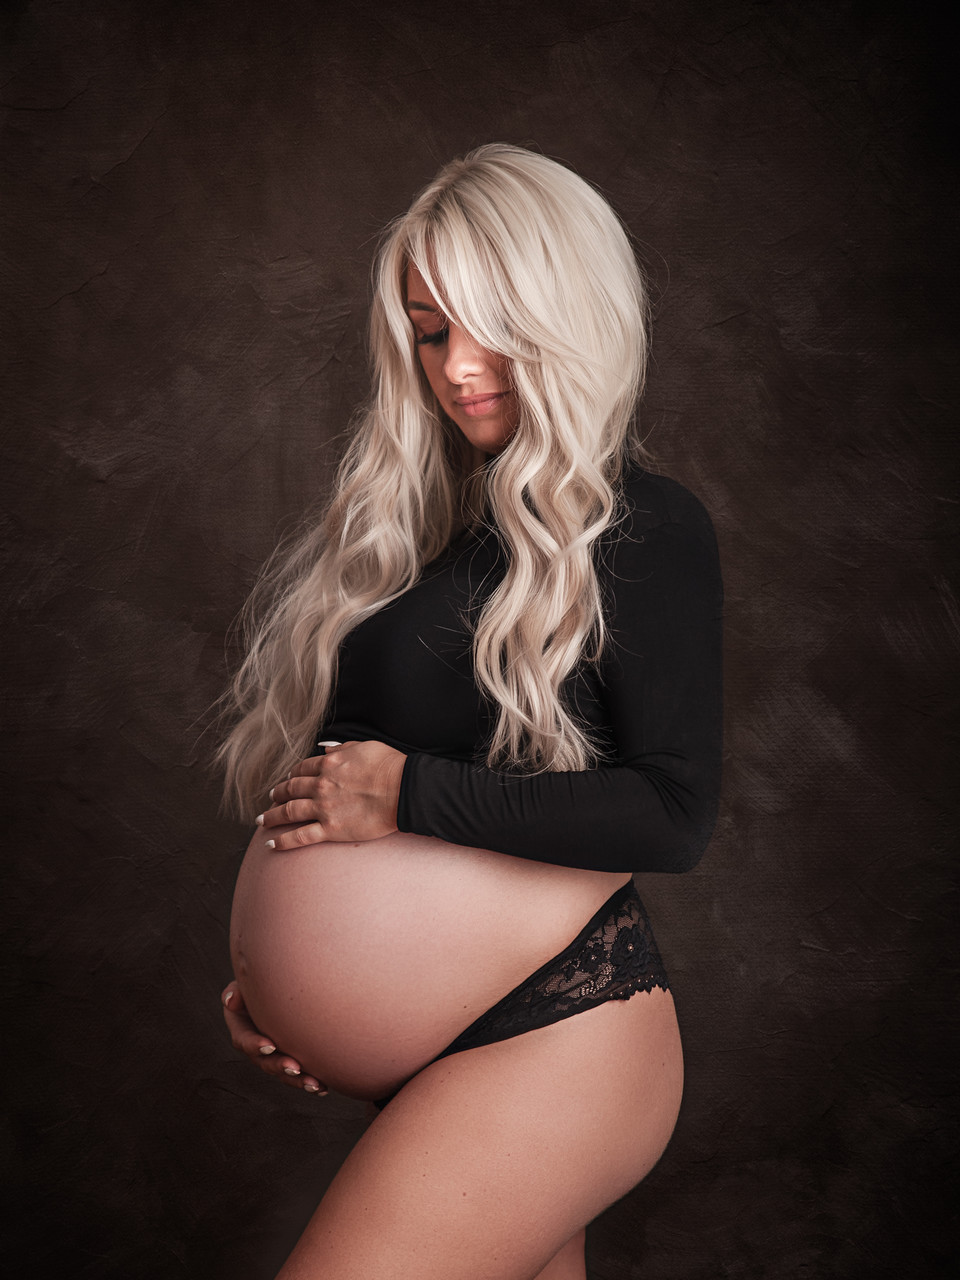 pregnancy photo ideas